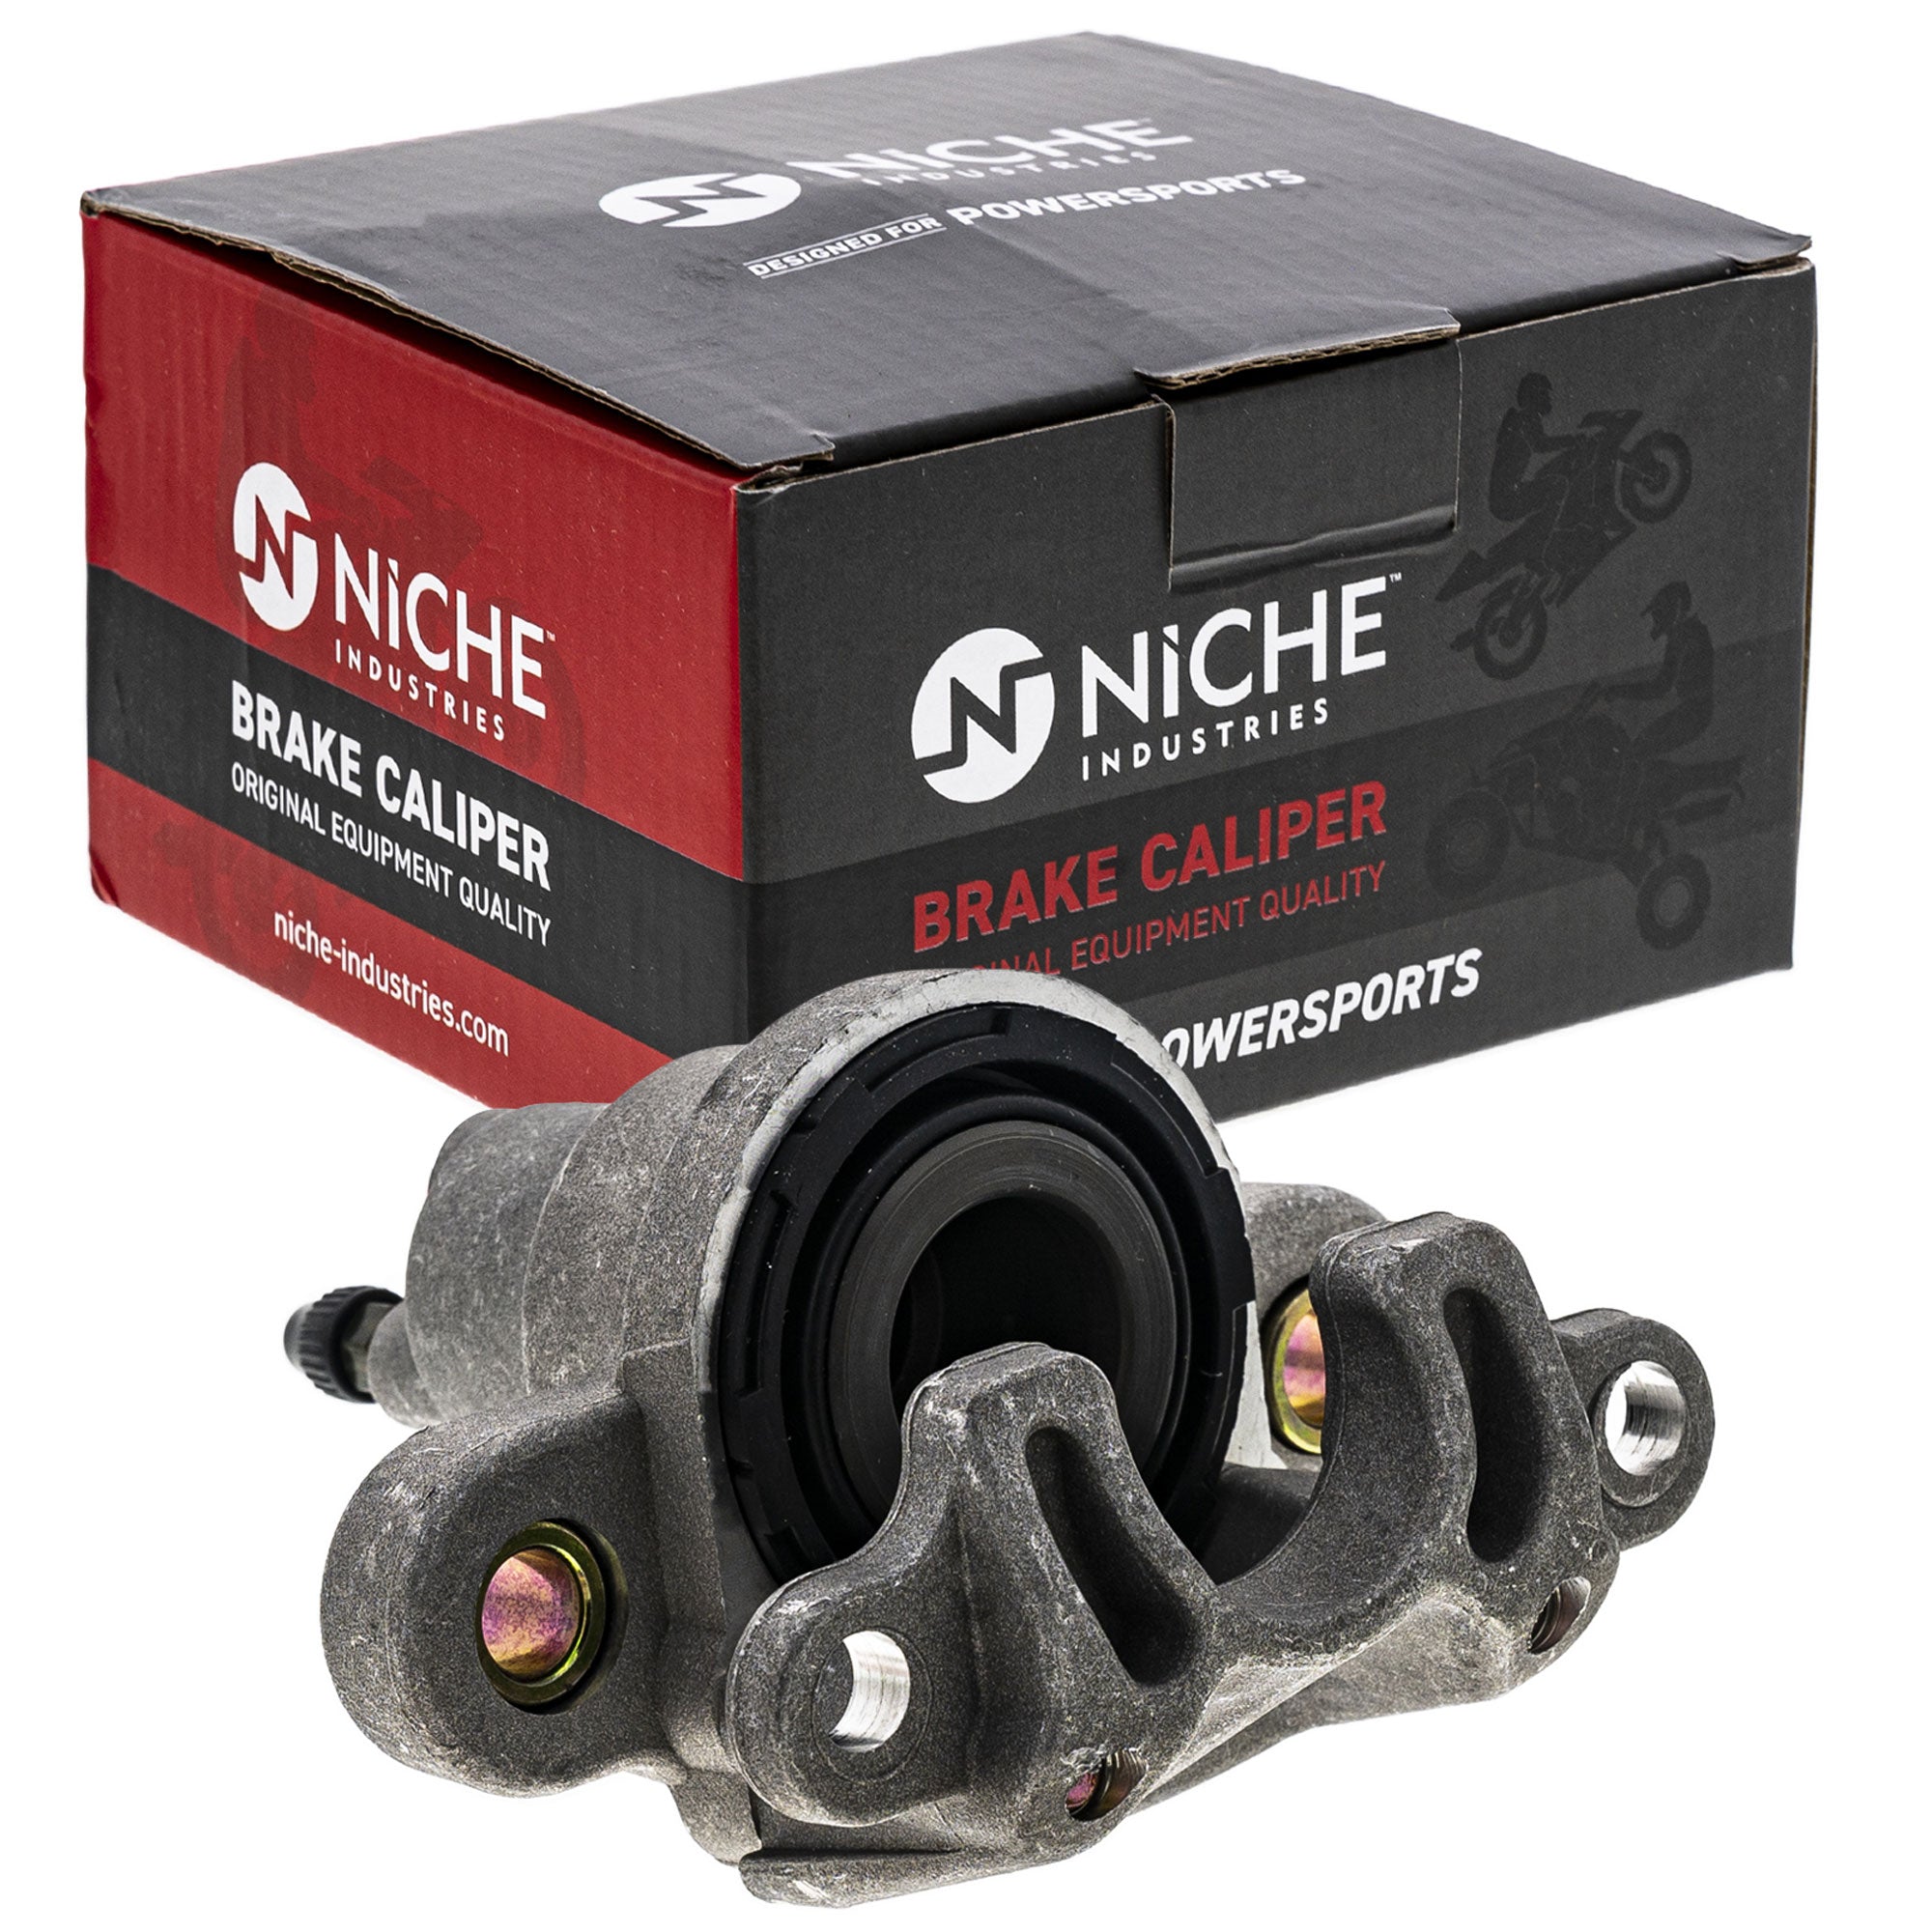 NICHE MK1001077 Brake Caliper Kit for Polaris Trail Scrambler